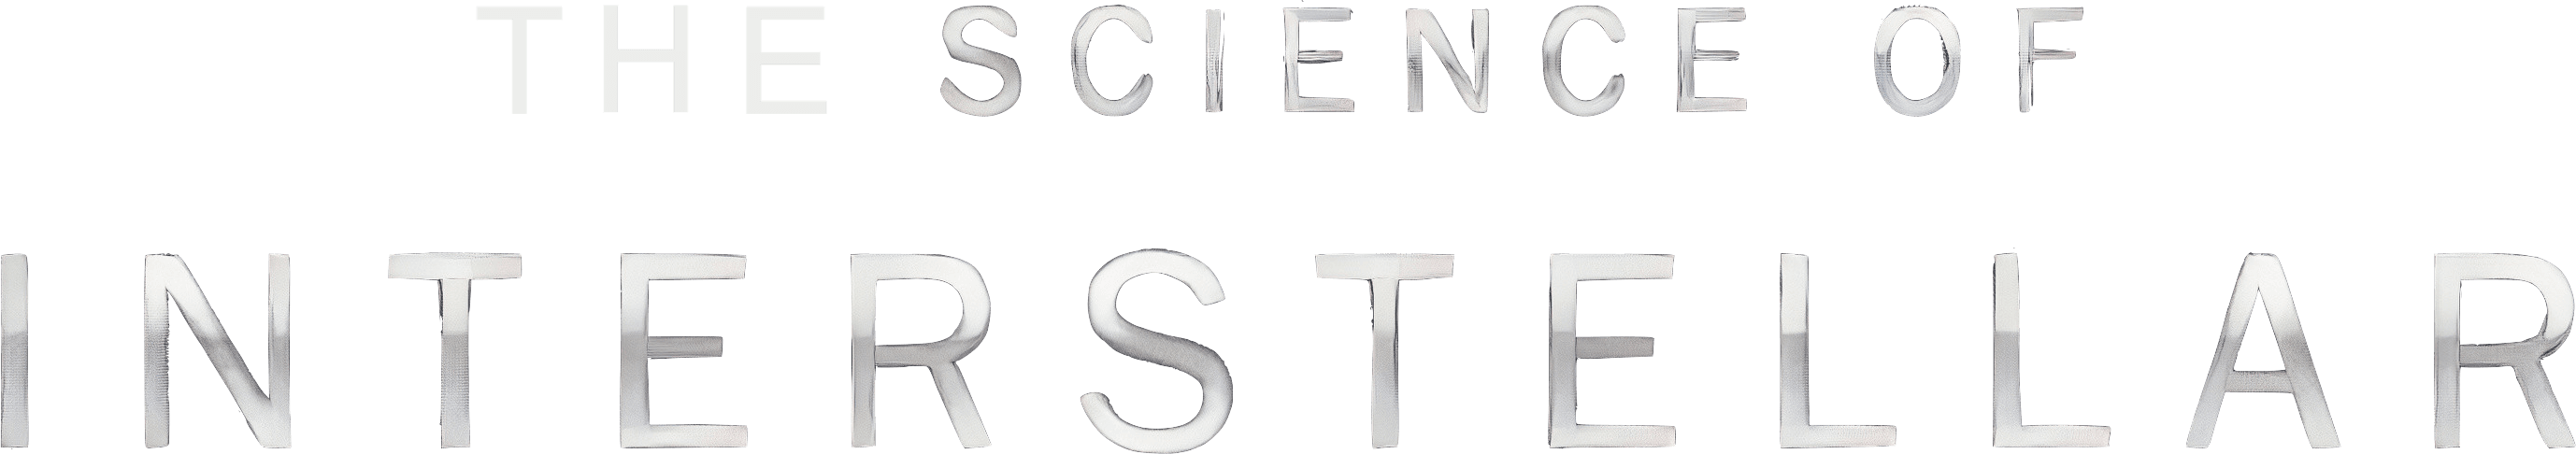 The Science of Interstellar logo